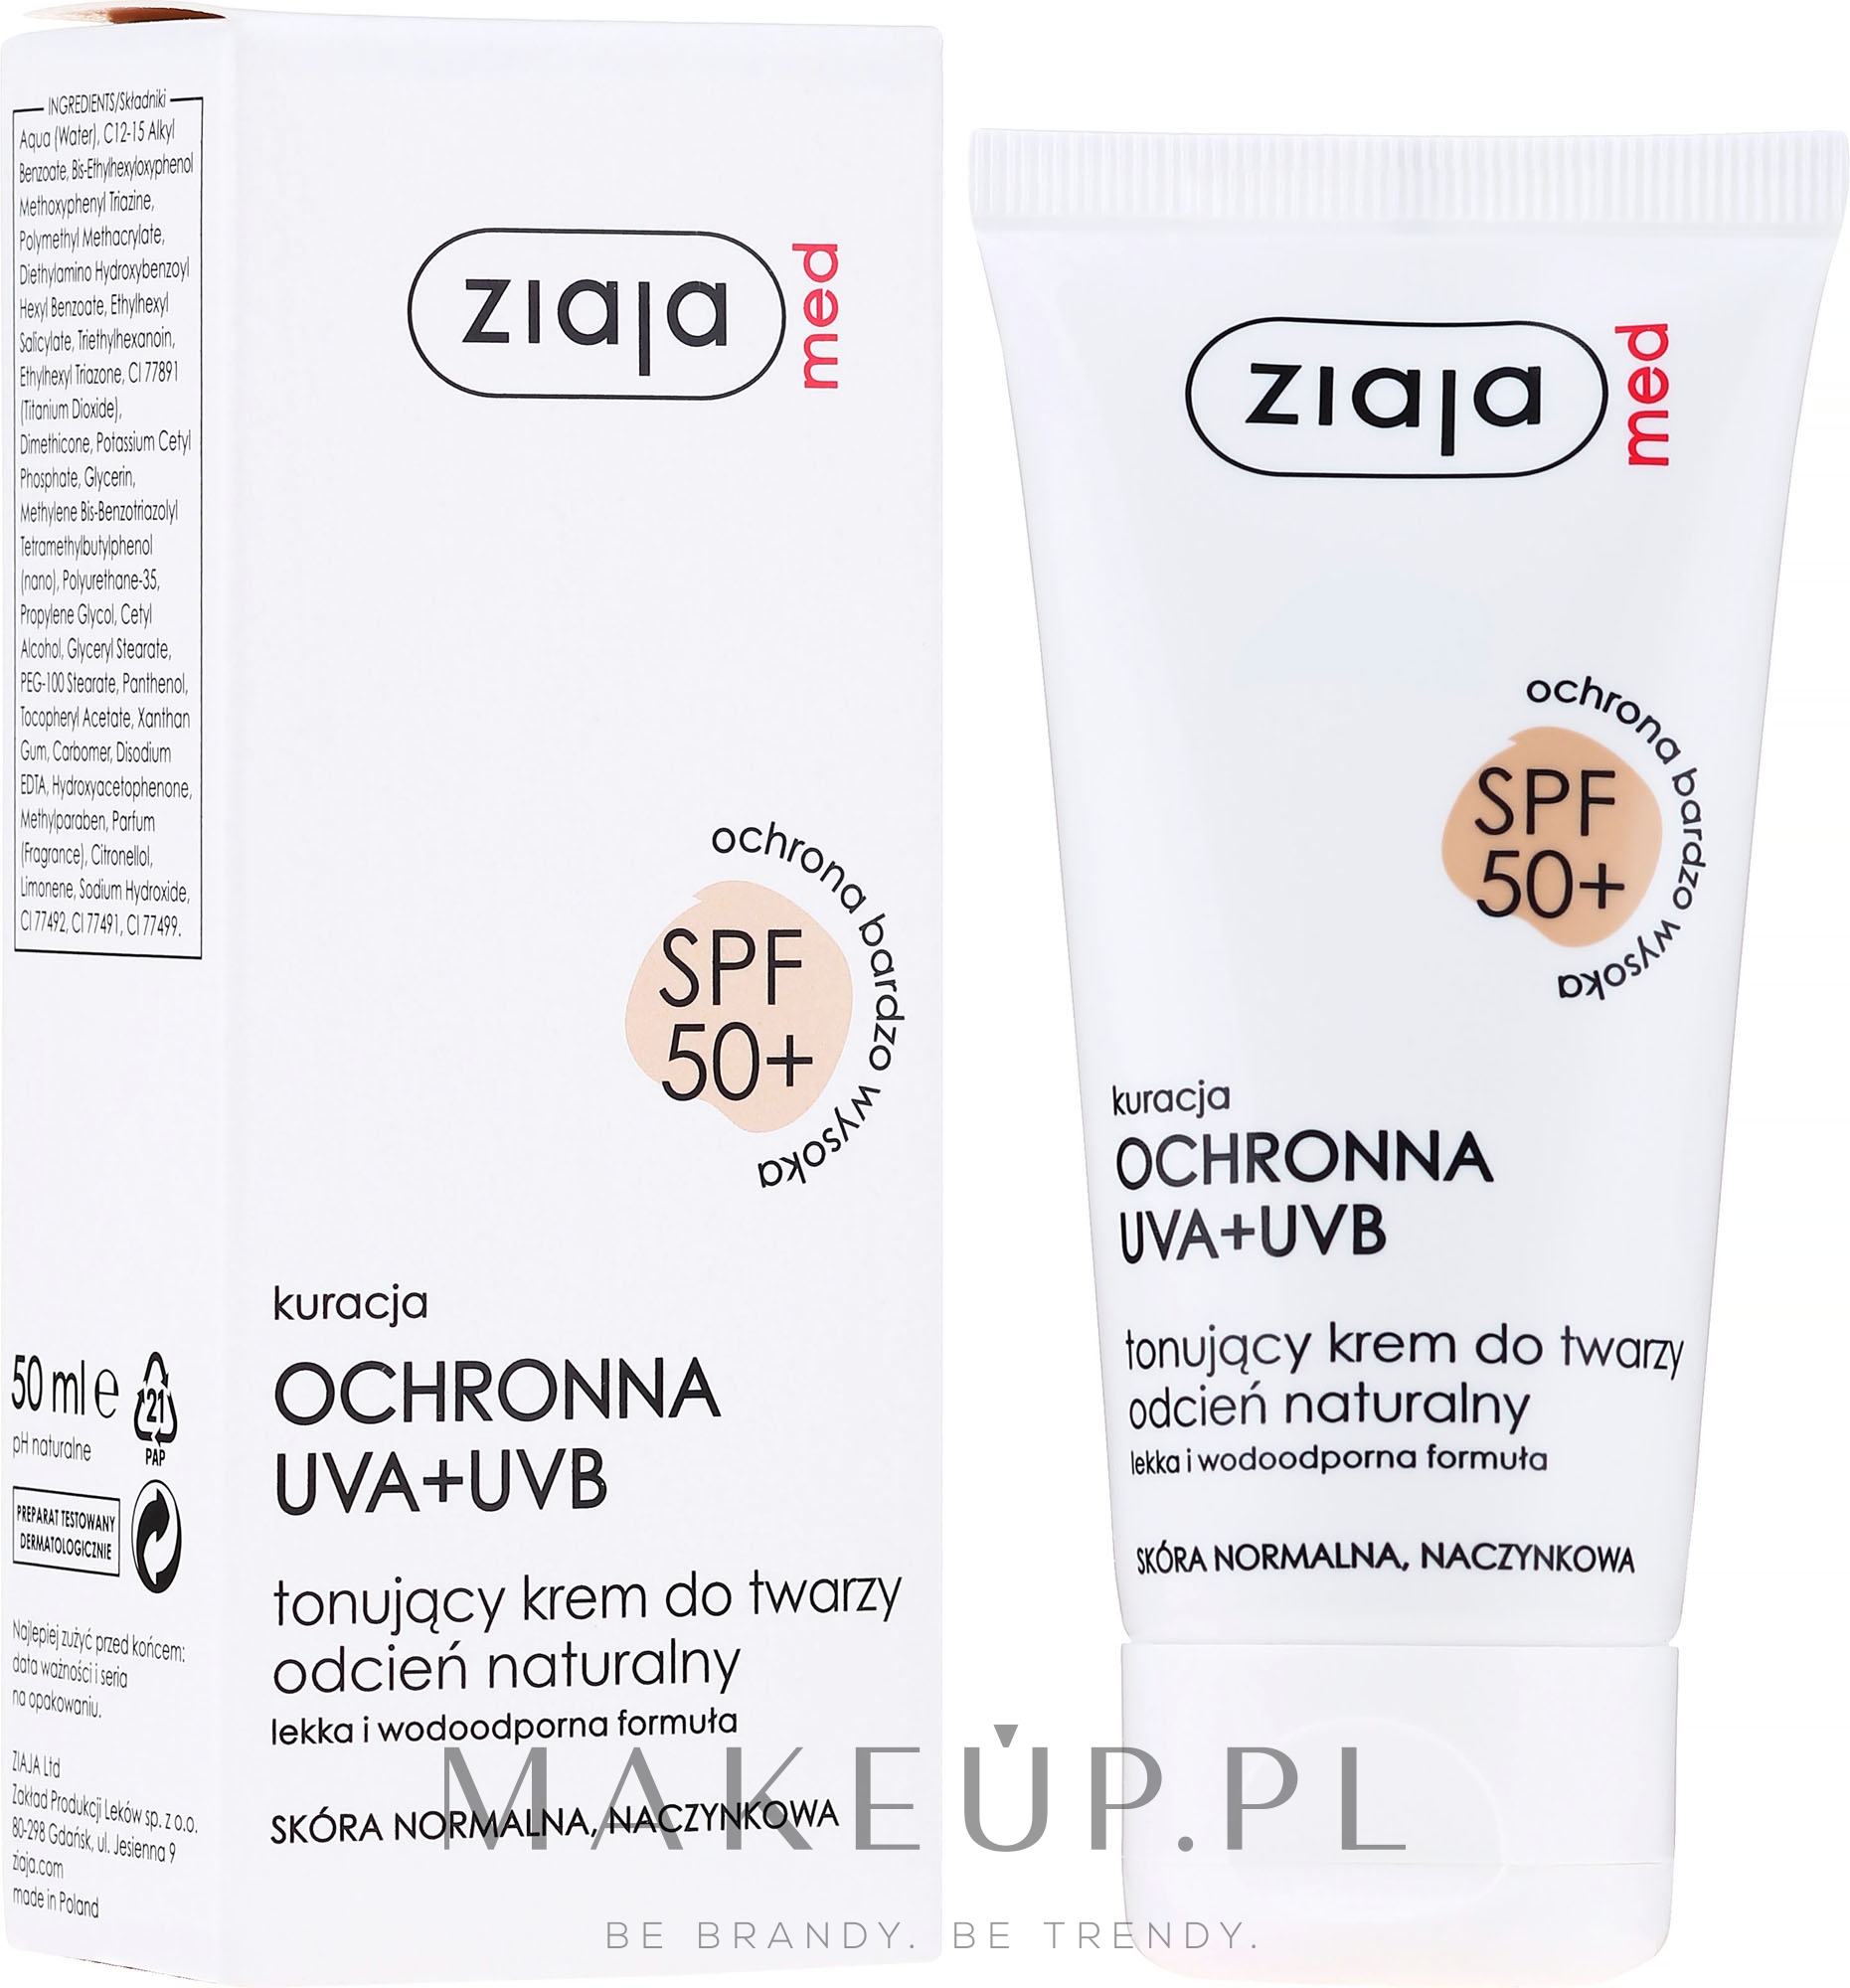 Tonujący krem do twarzy odcień naturalny SPF 50+ - Ziaja Med Toning Face Cream Natural Shade UVA+UVB — Zdjęcie 50 ml